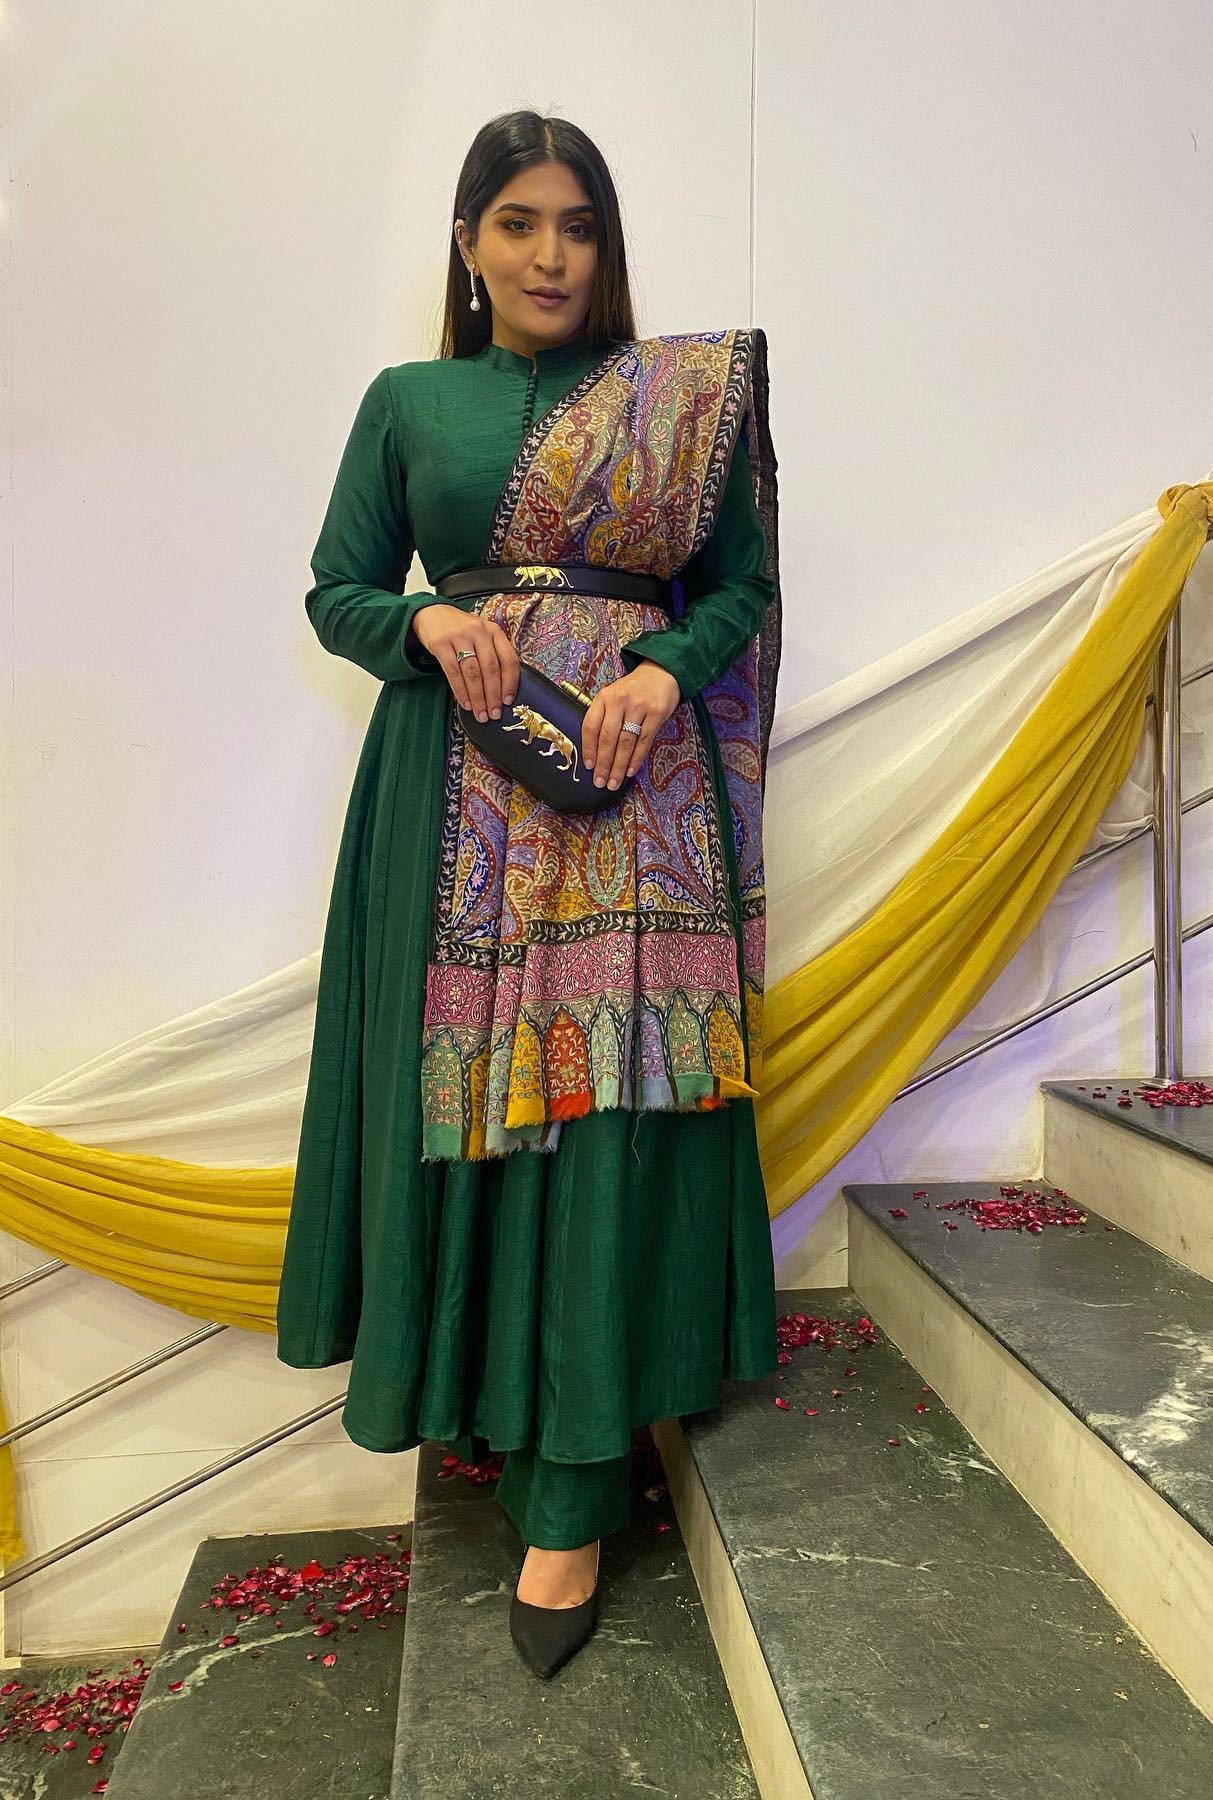 Shreya Jain Classy & Elegant Lok In Green Kurta & Printed Yellow Dupatta With Sabyasachi Waist Belt & Clutch